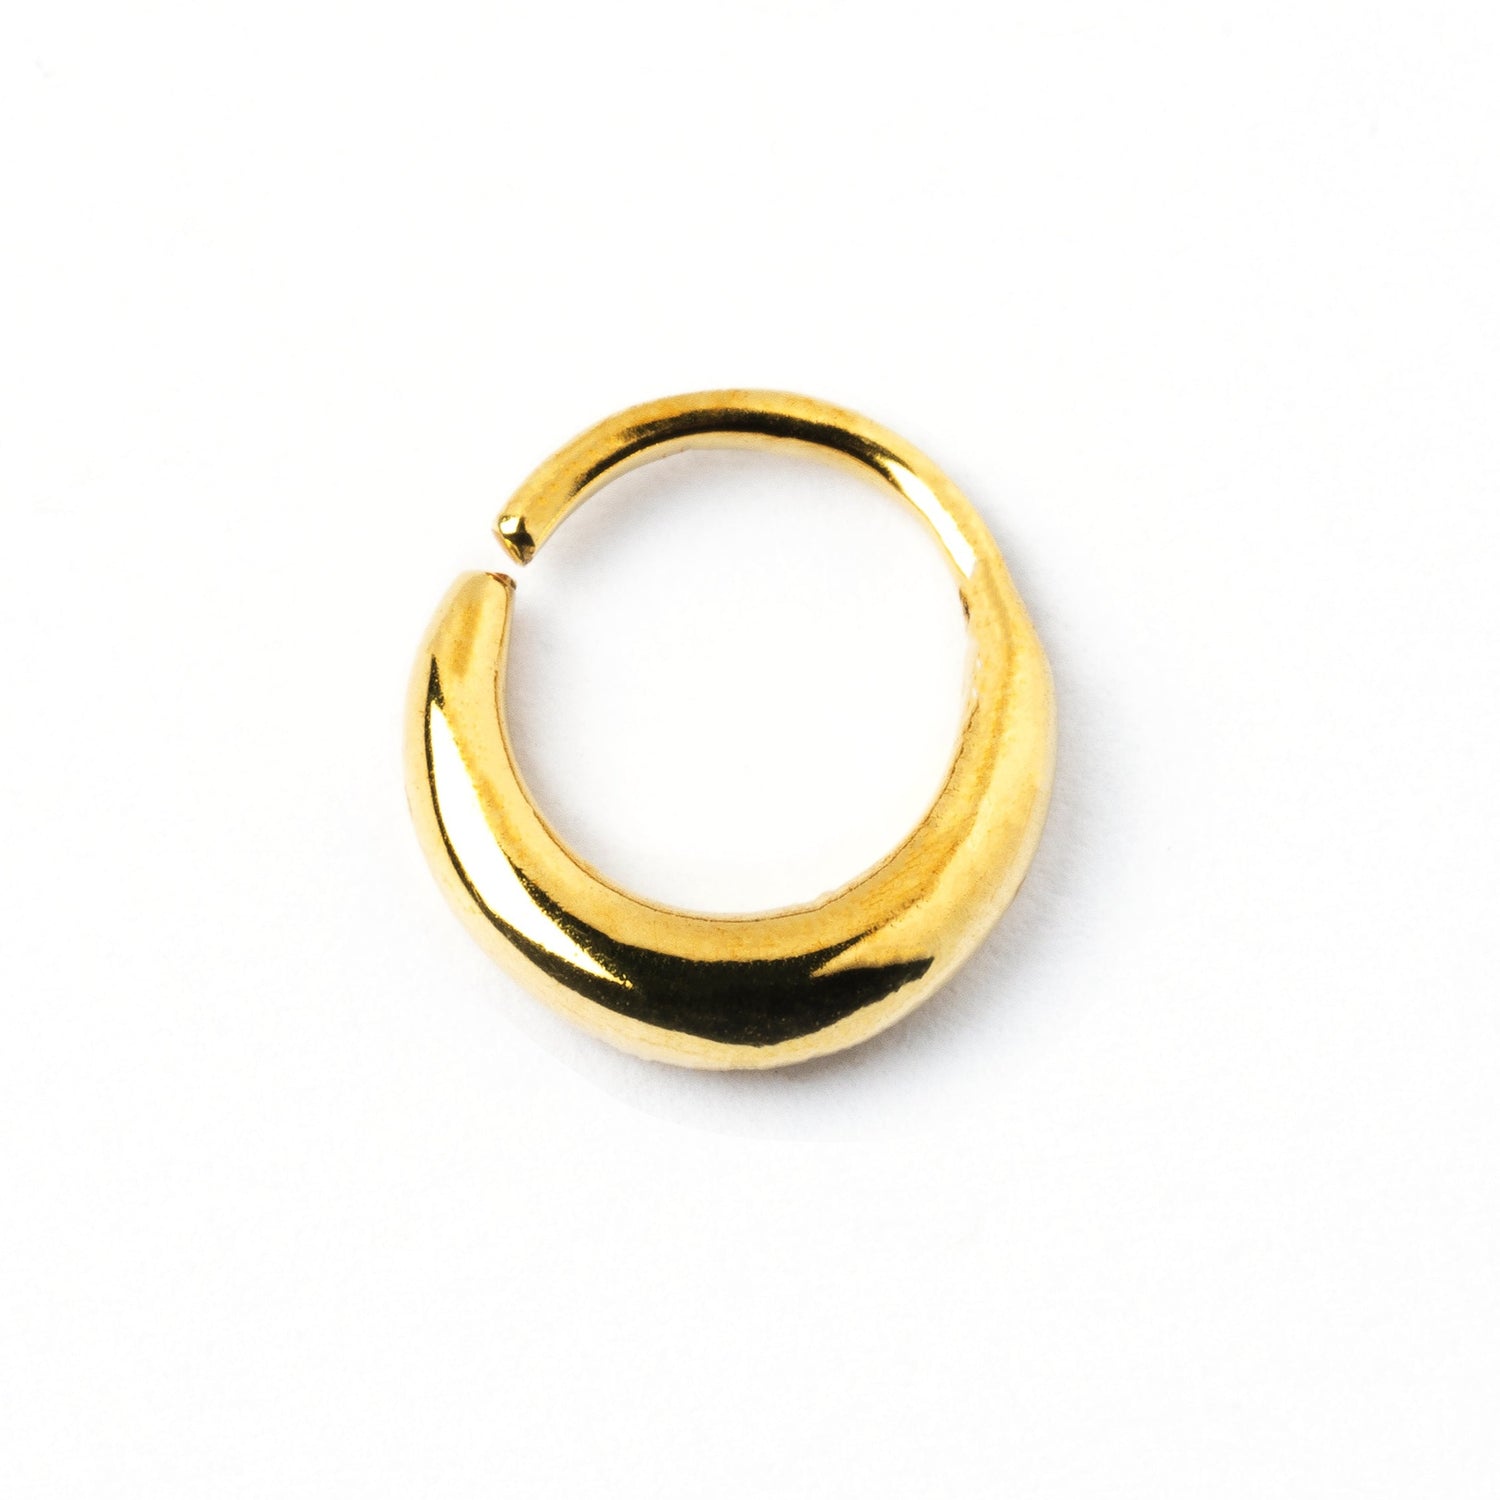 golden brass Rajasthan septum ring frontal view